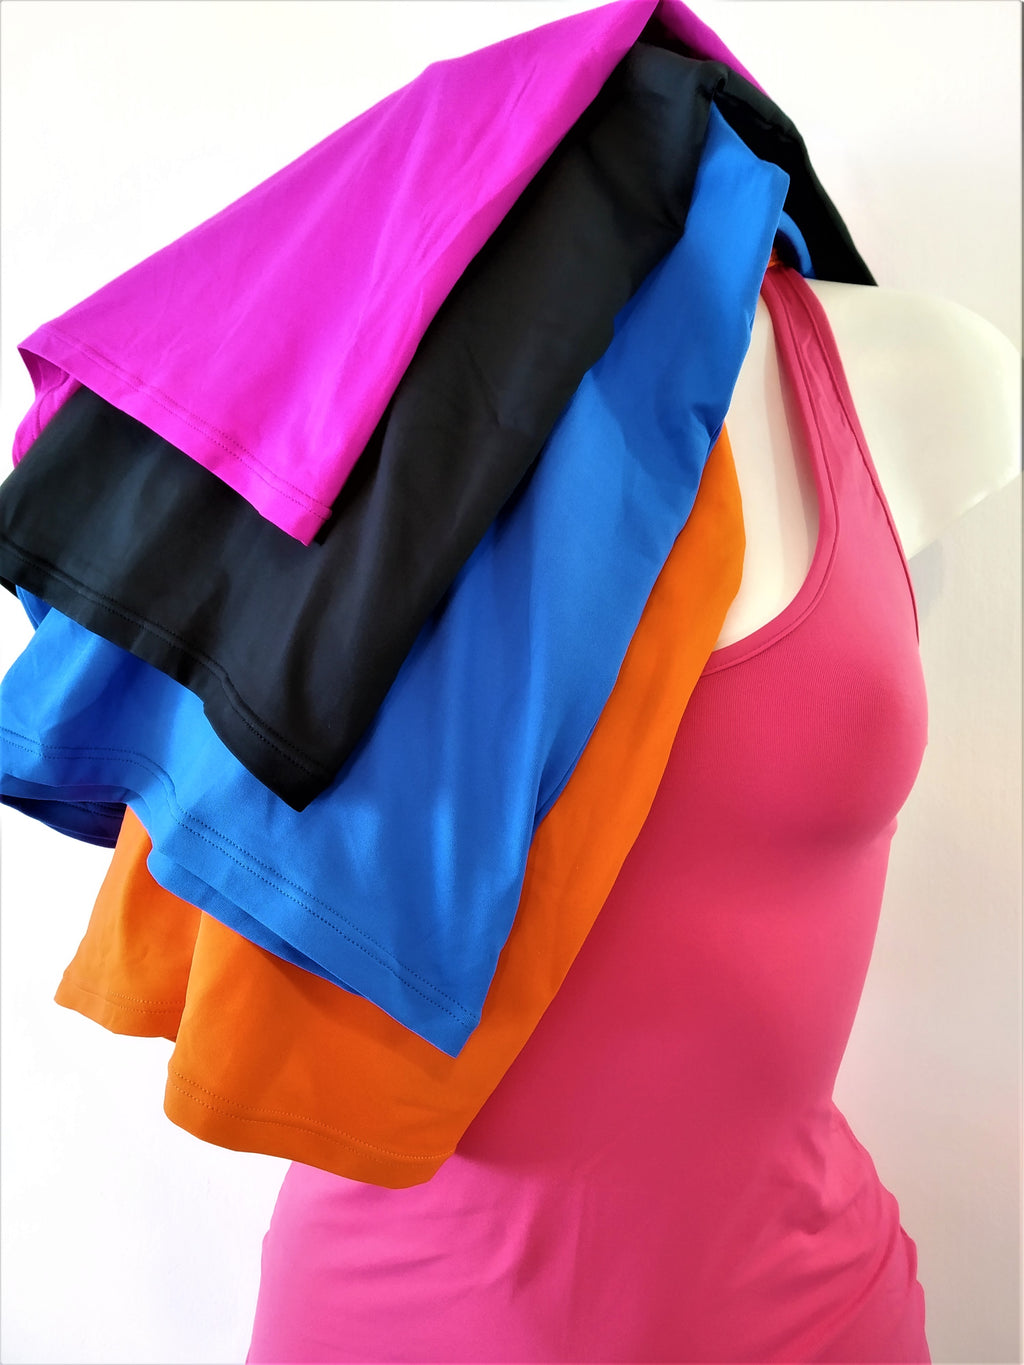 lycra tank dress slim cut, mini,tight on the body, 4 colors: hot pink, black, blue, orange. bikinn.com